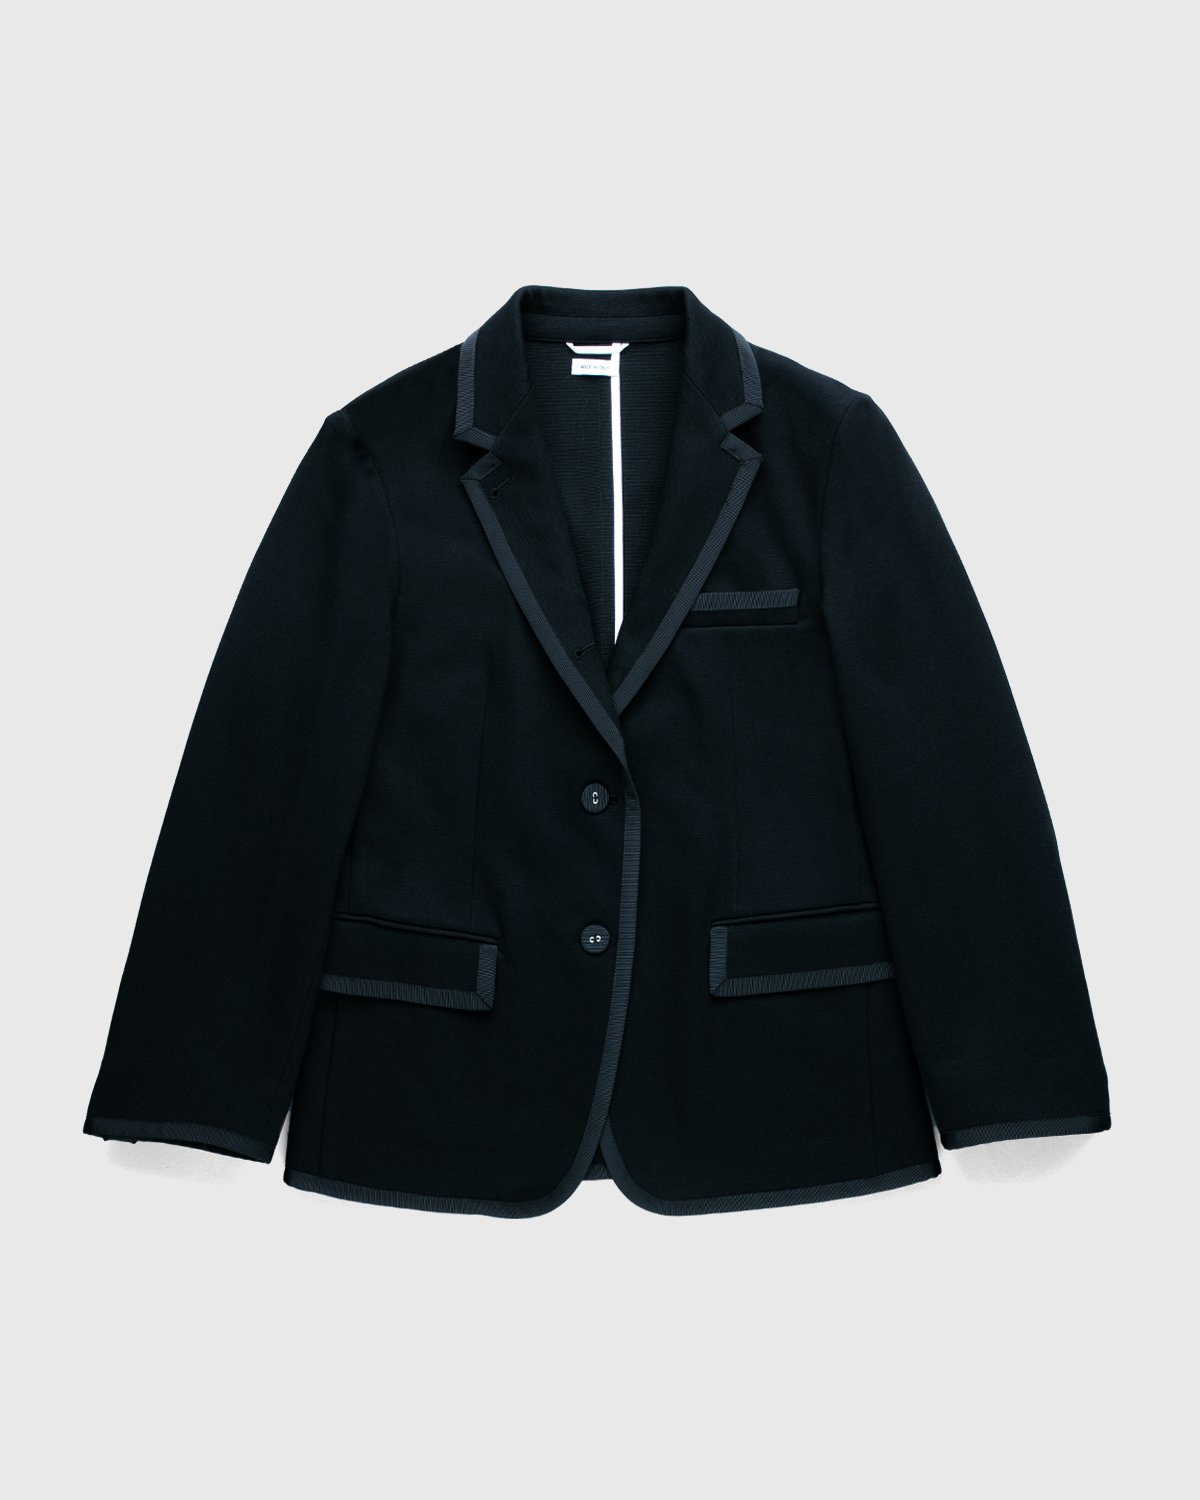 Thom Browne x Highsnobiety - Women’s Deconstructed Sport Jacket Black - Clothing - Black - Image 1